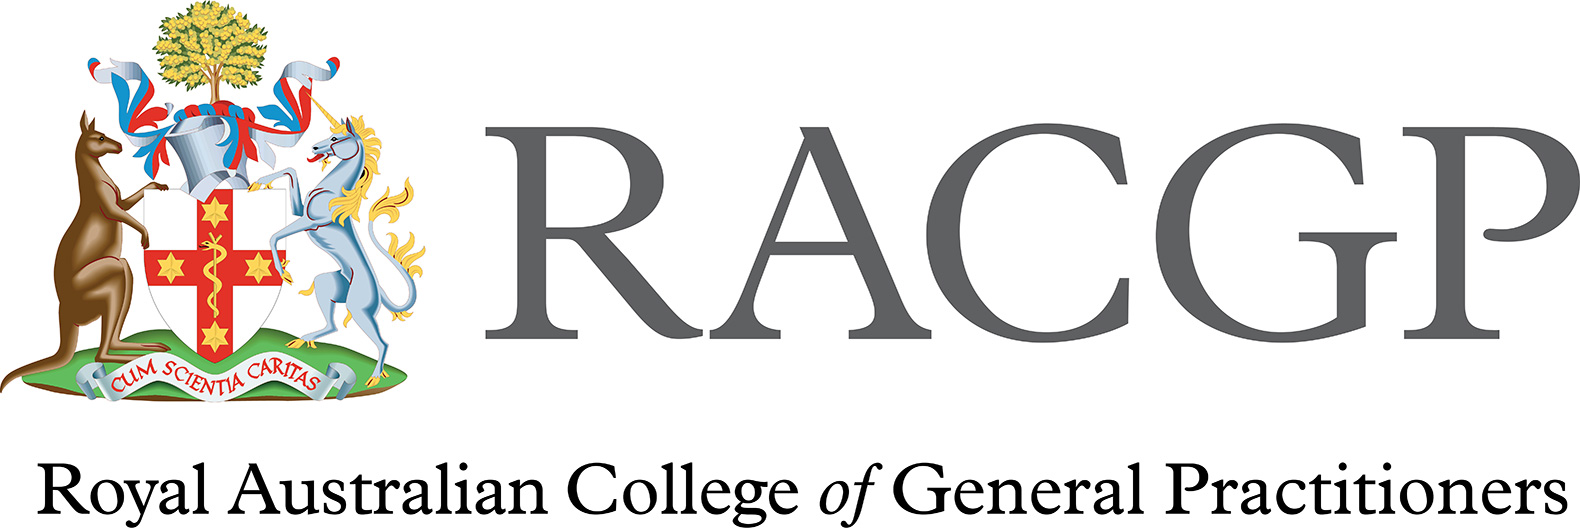 racgp-logo